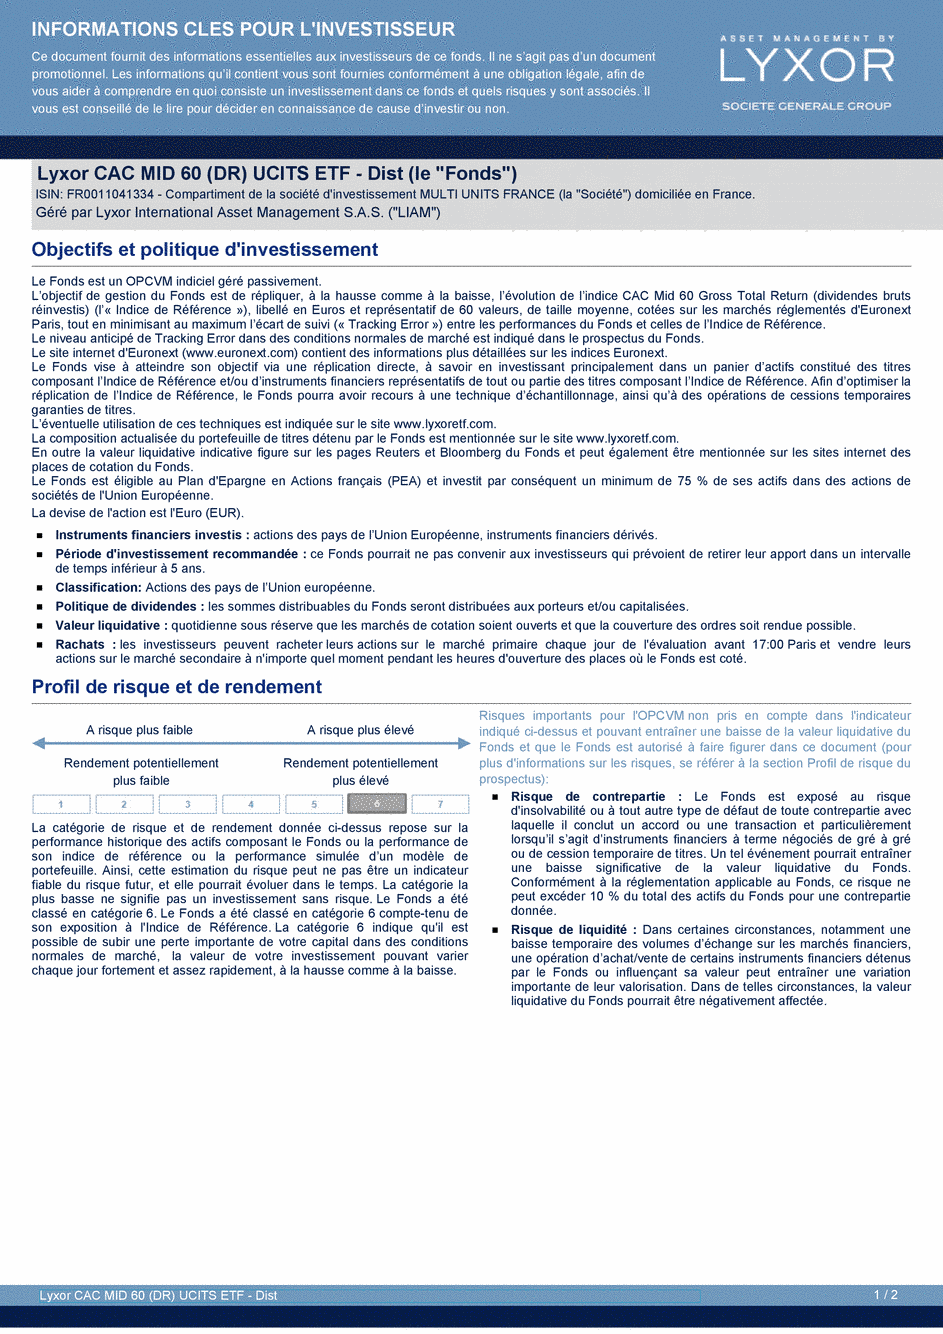 DICI Lyxor CAC MID 60 (DR) UCITS ETF - Dist - 19/02/2021 - Français